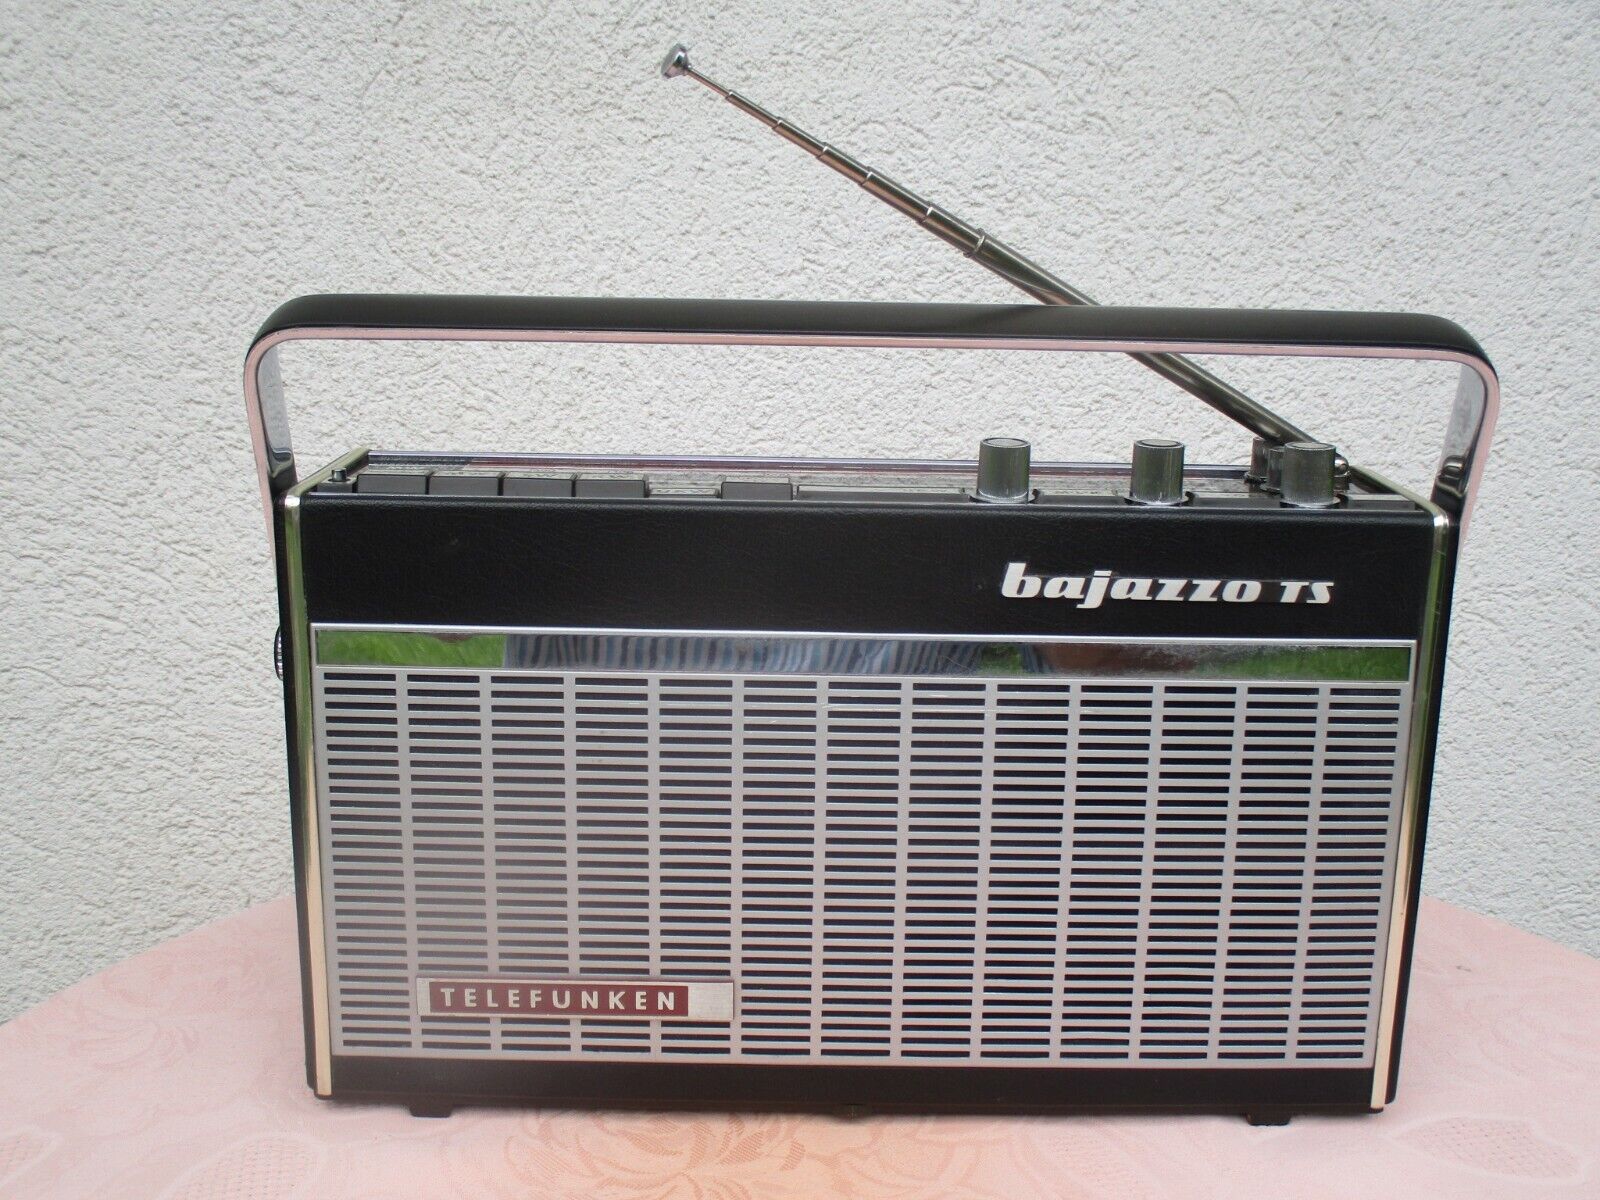 TELEFUNKEN BAJAZZO TS, transistor radio, suitcase radio, MINT CONDITION